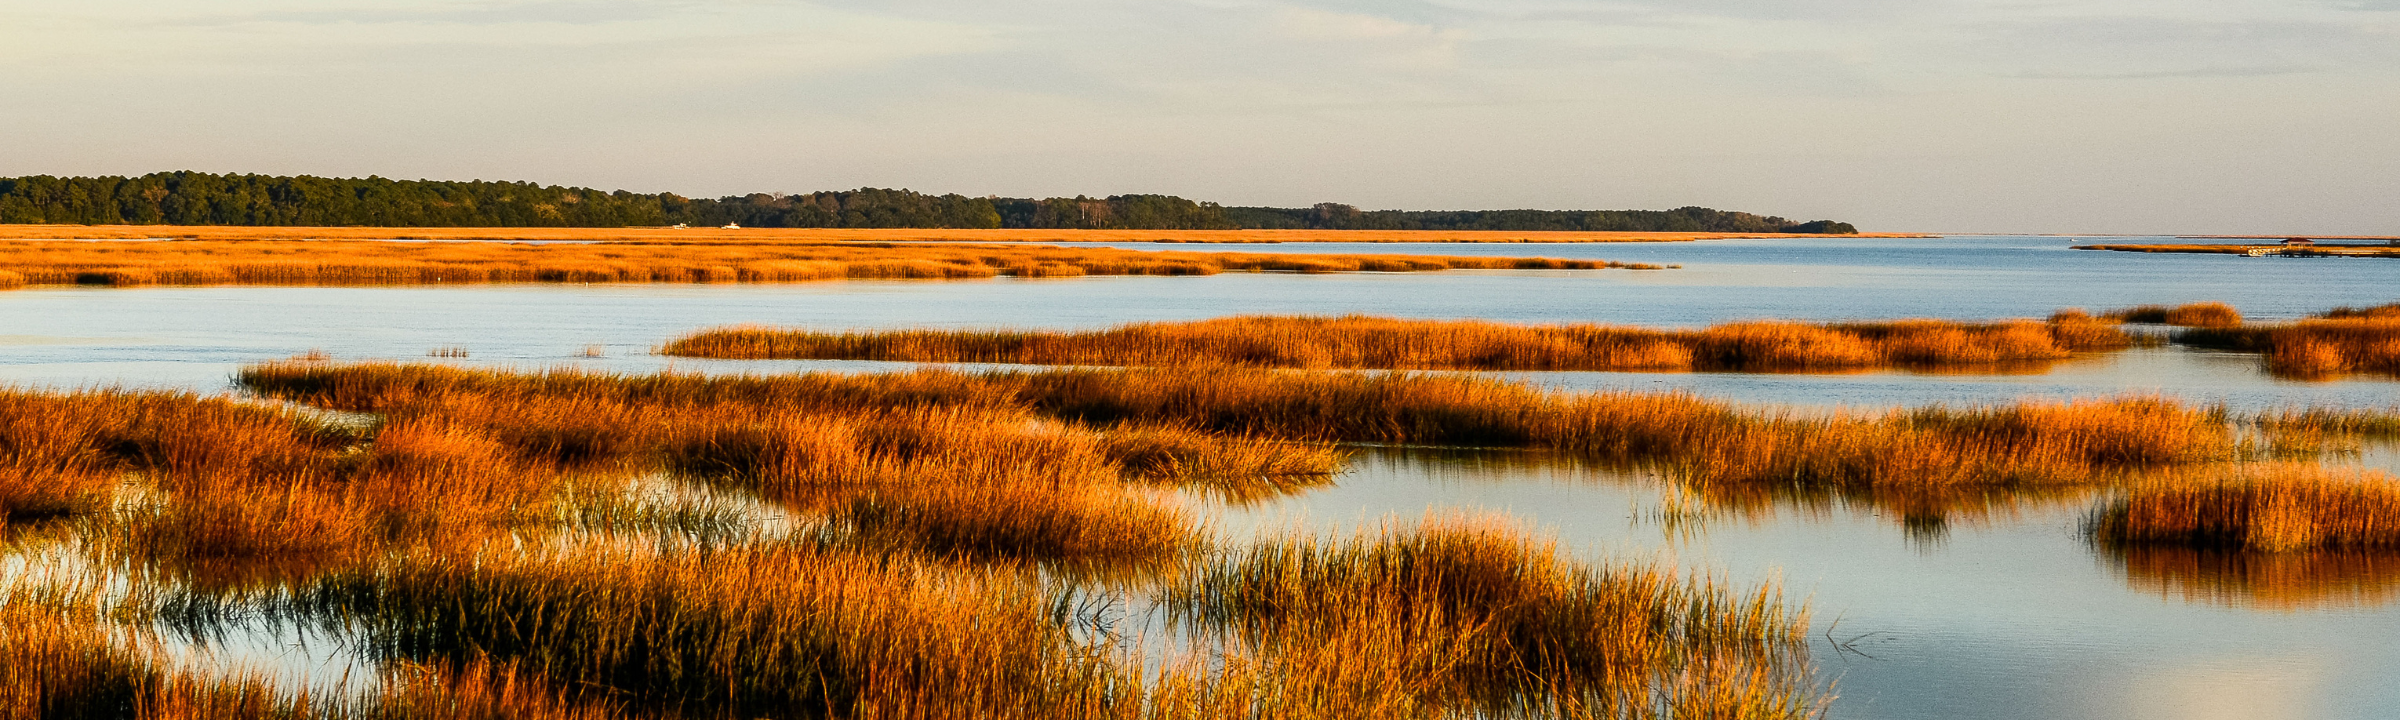 Blufton South Carolina wetlands